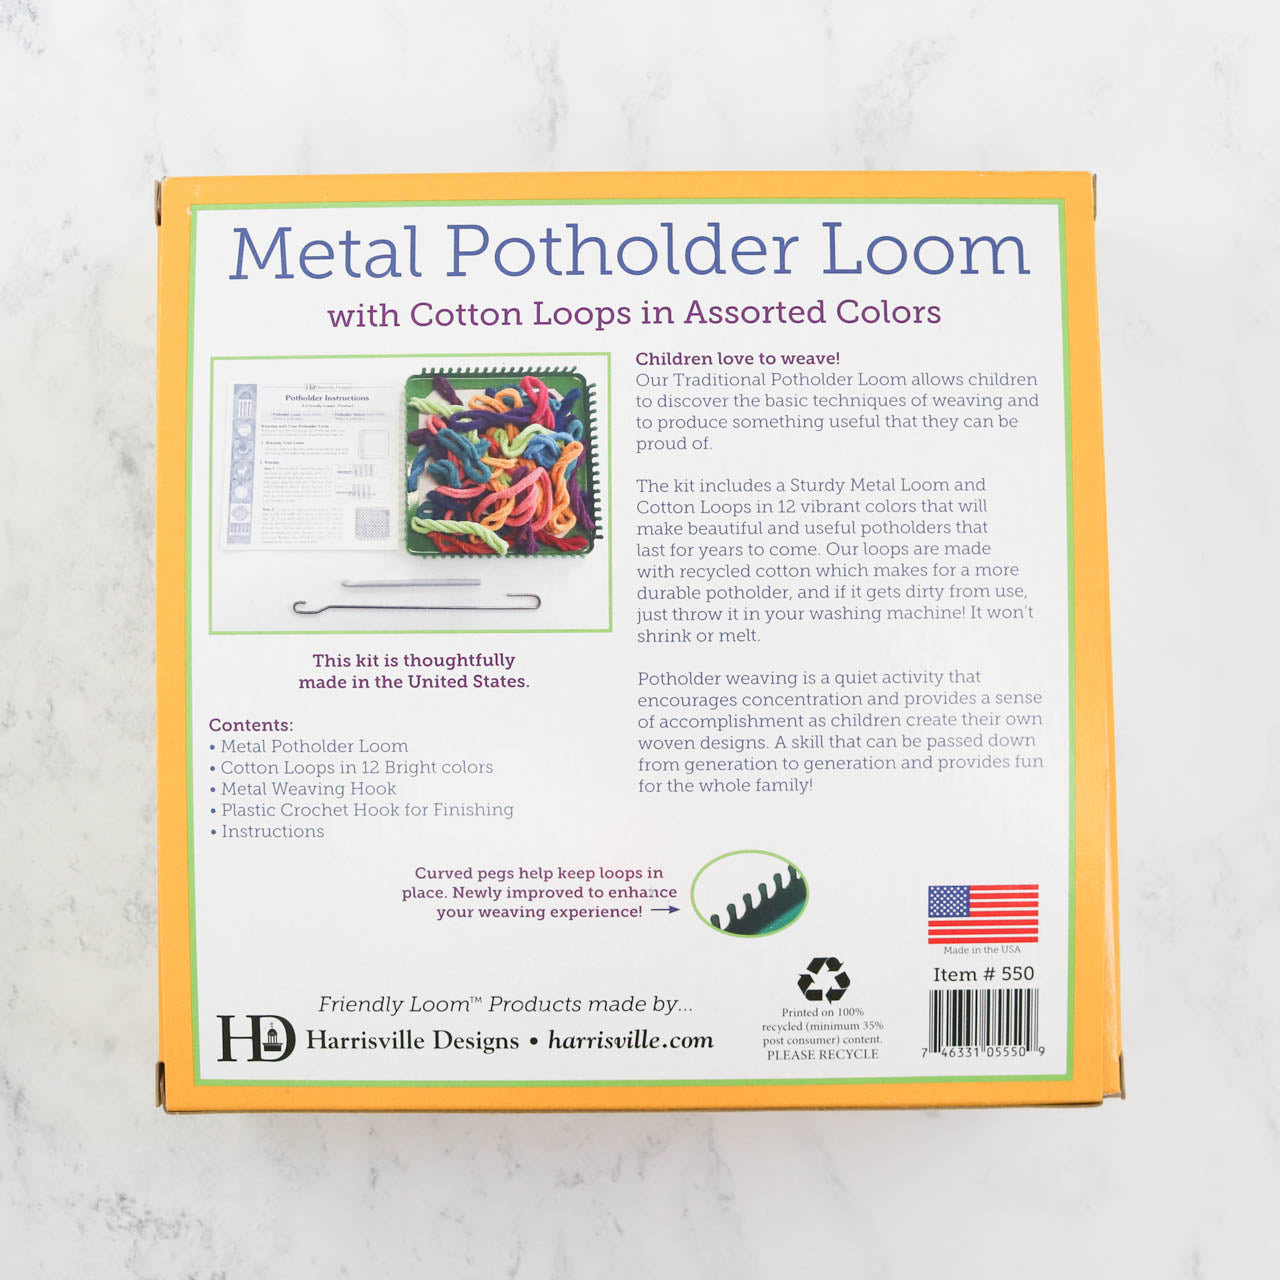 Potholder Loom Kit, Harrisville Designs